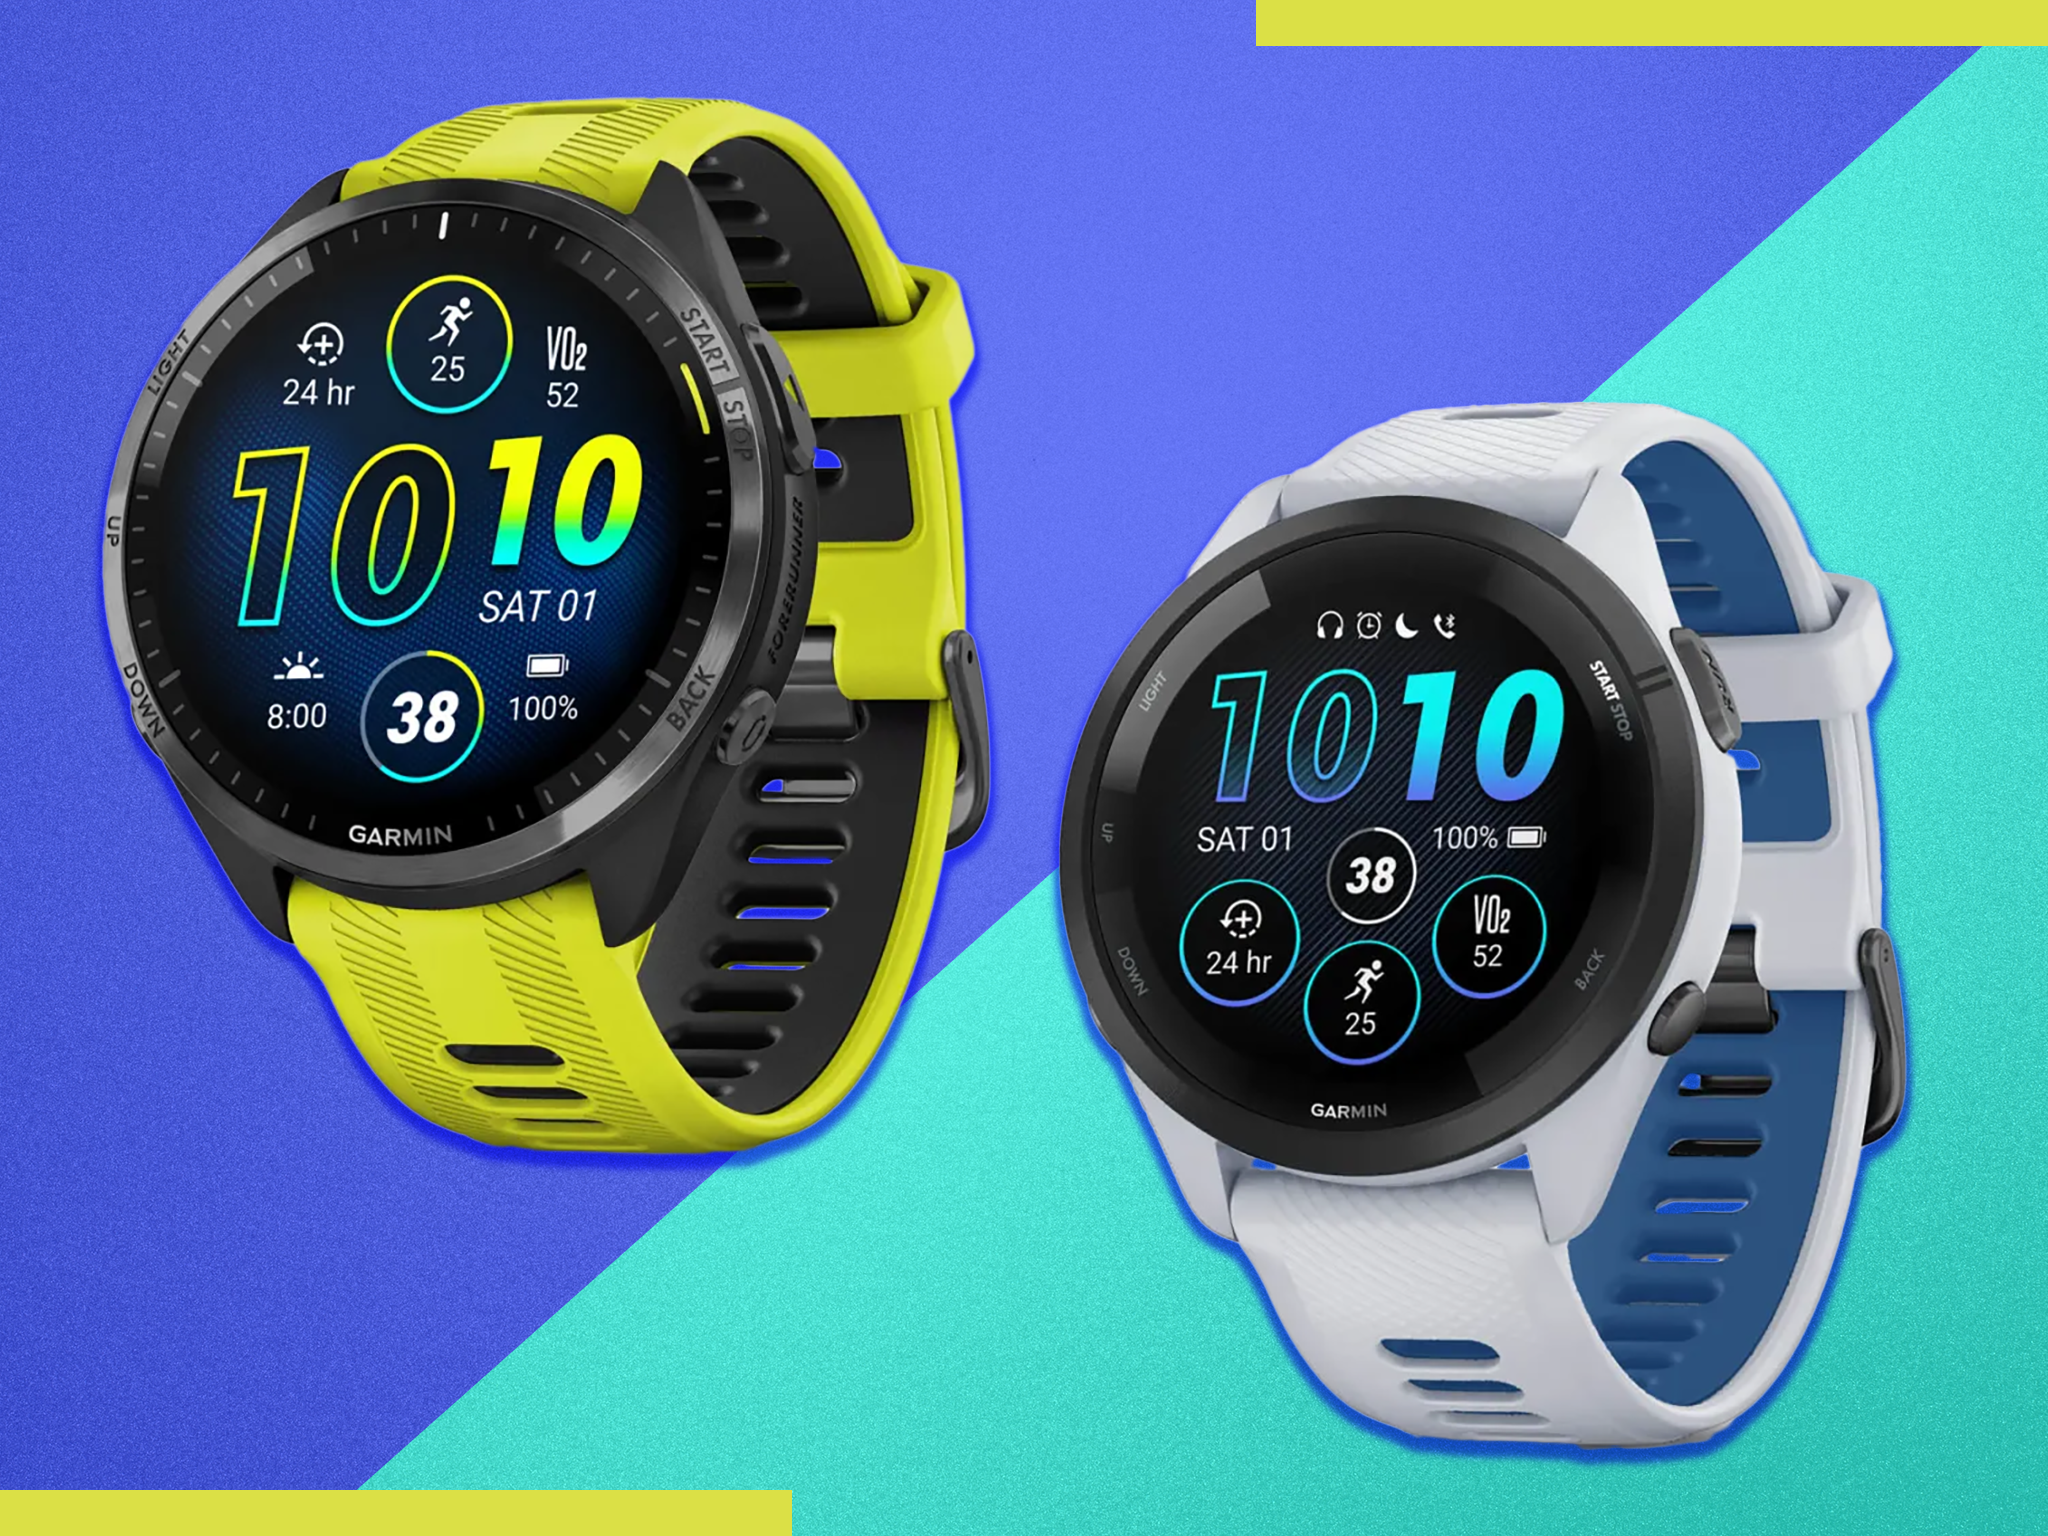 Get ready for your next half marathon with Garmin’s new watches